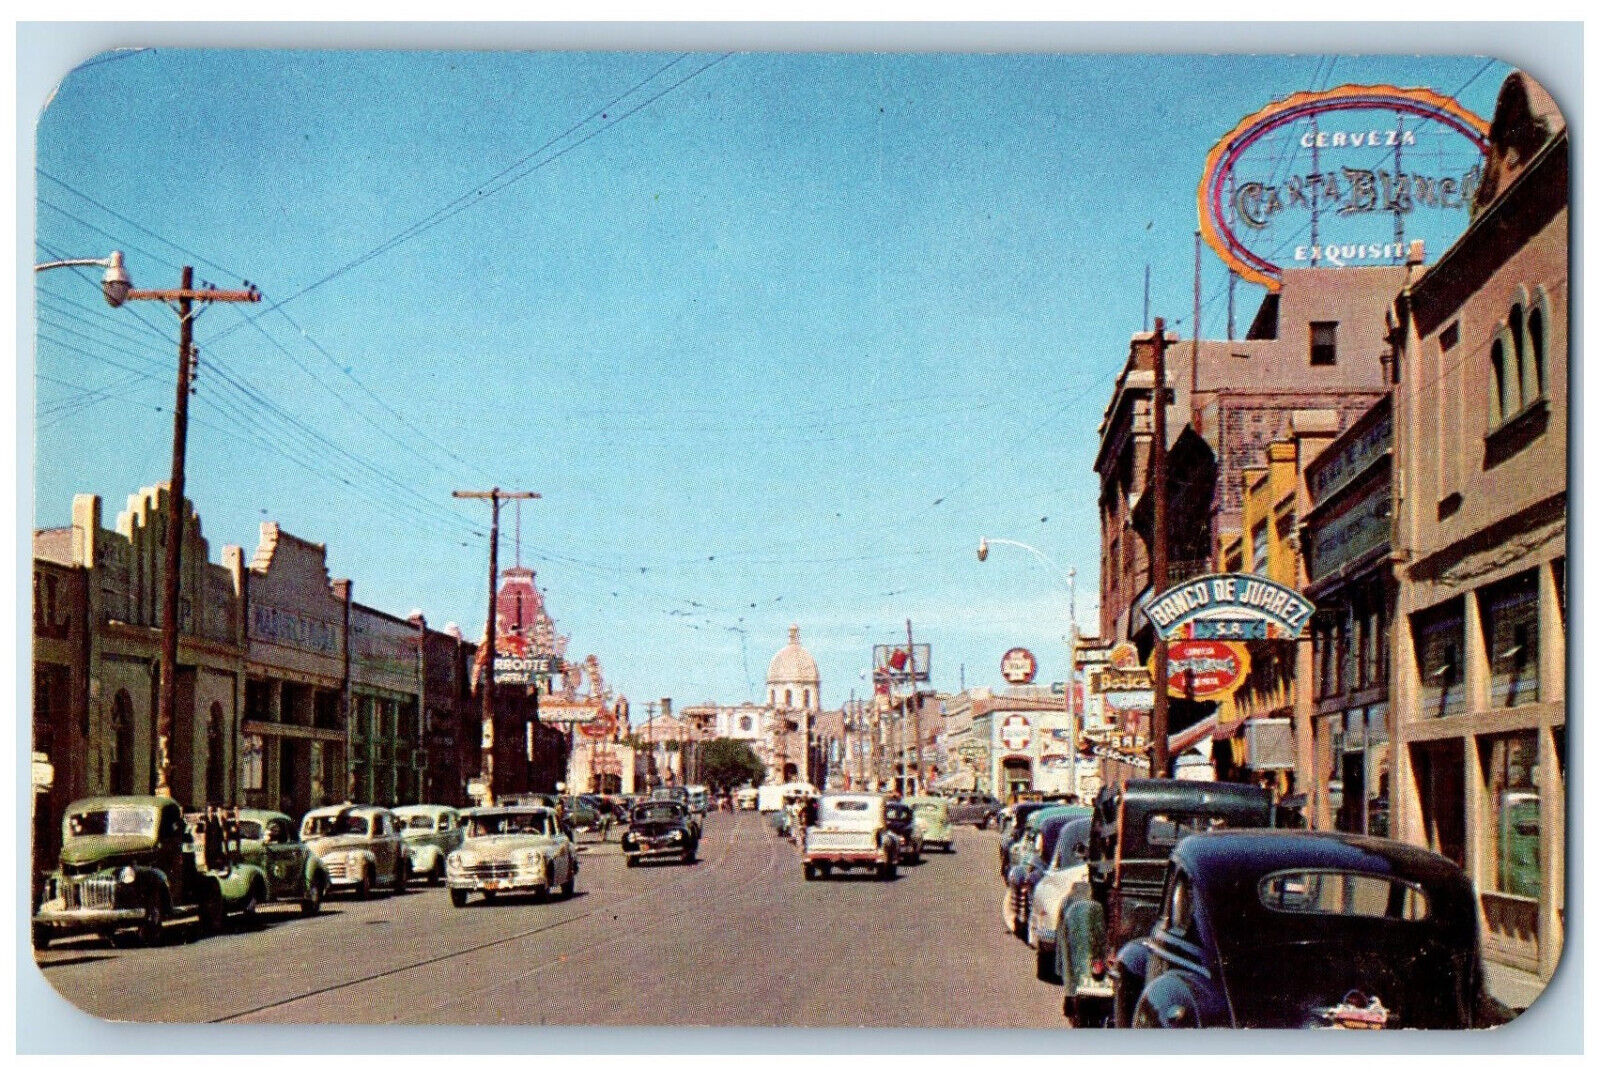 Ciudad Juarez Chihuahua Mexico Postcard Sixteenth of September Street c1960's